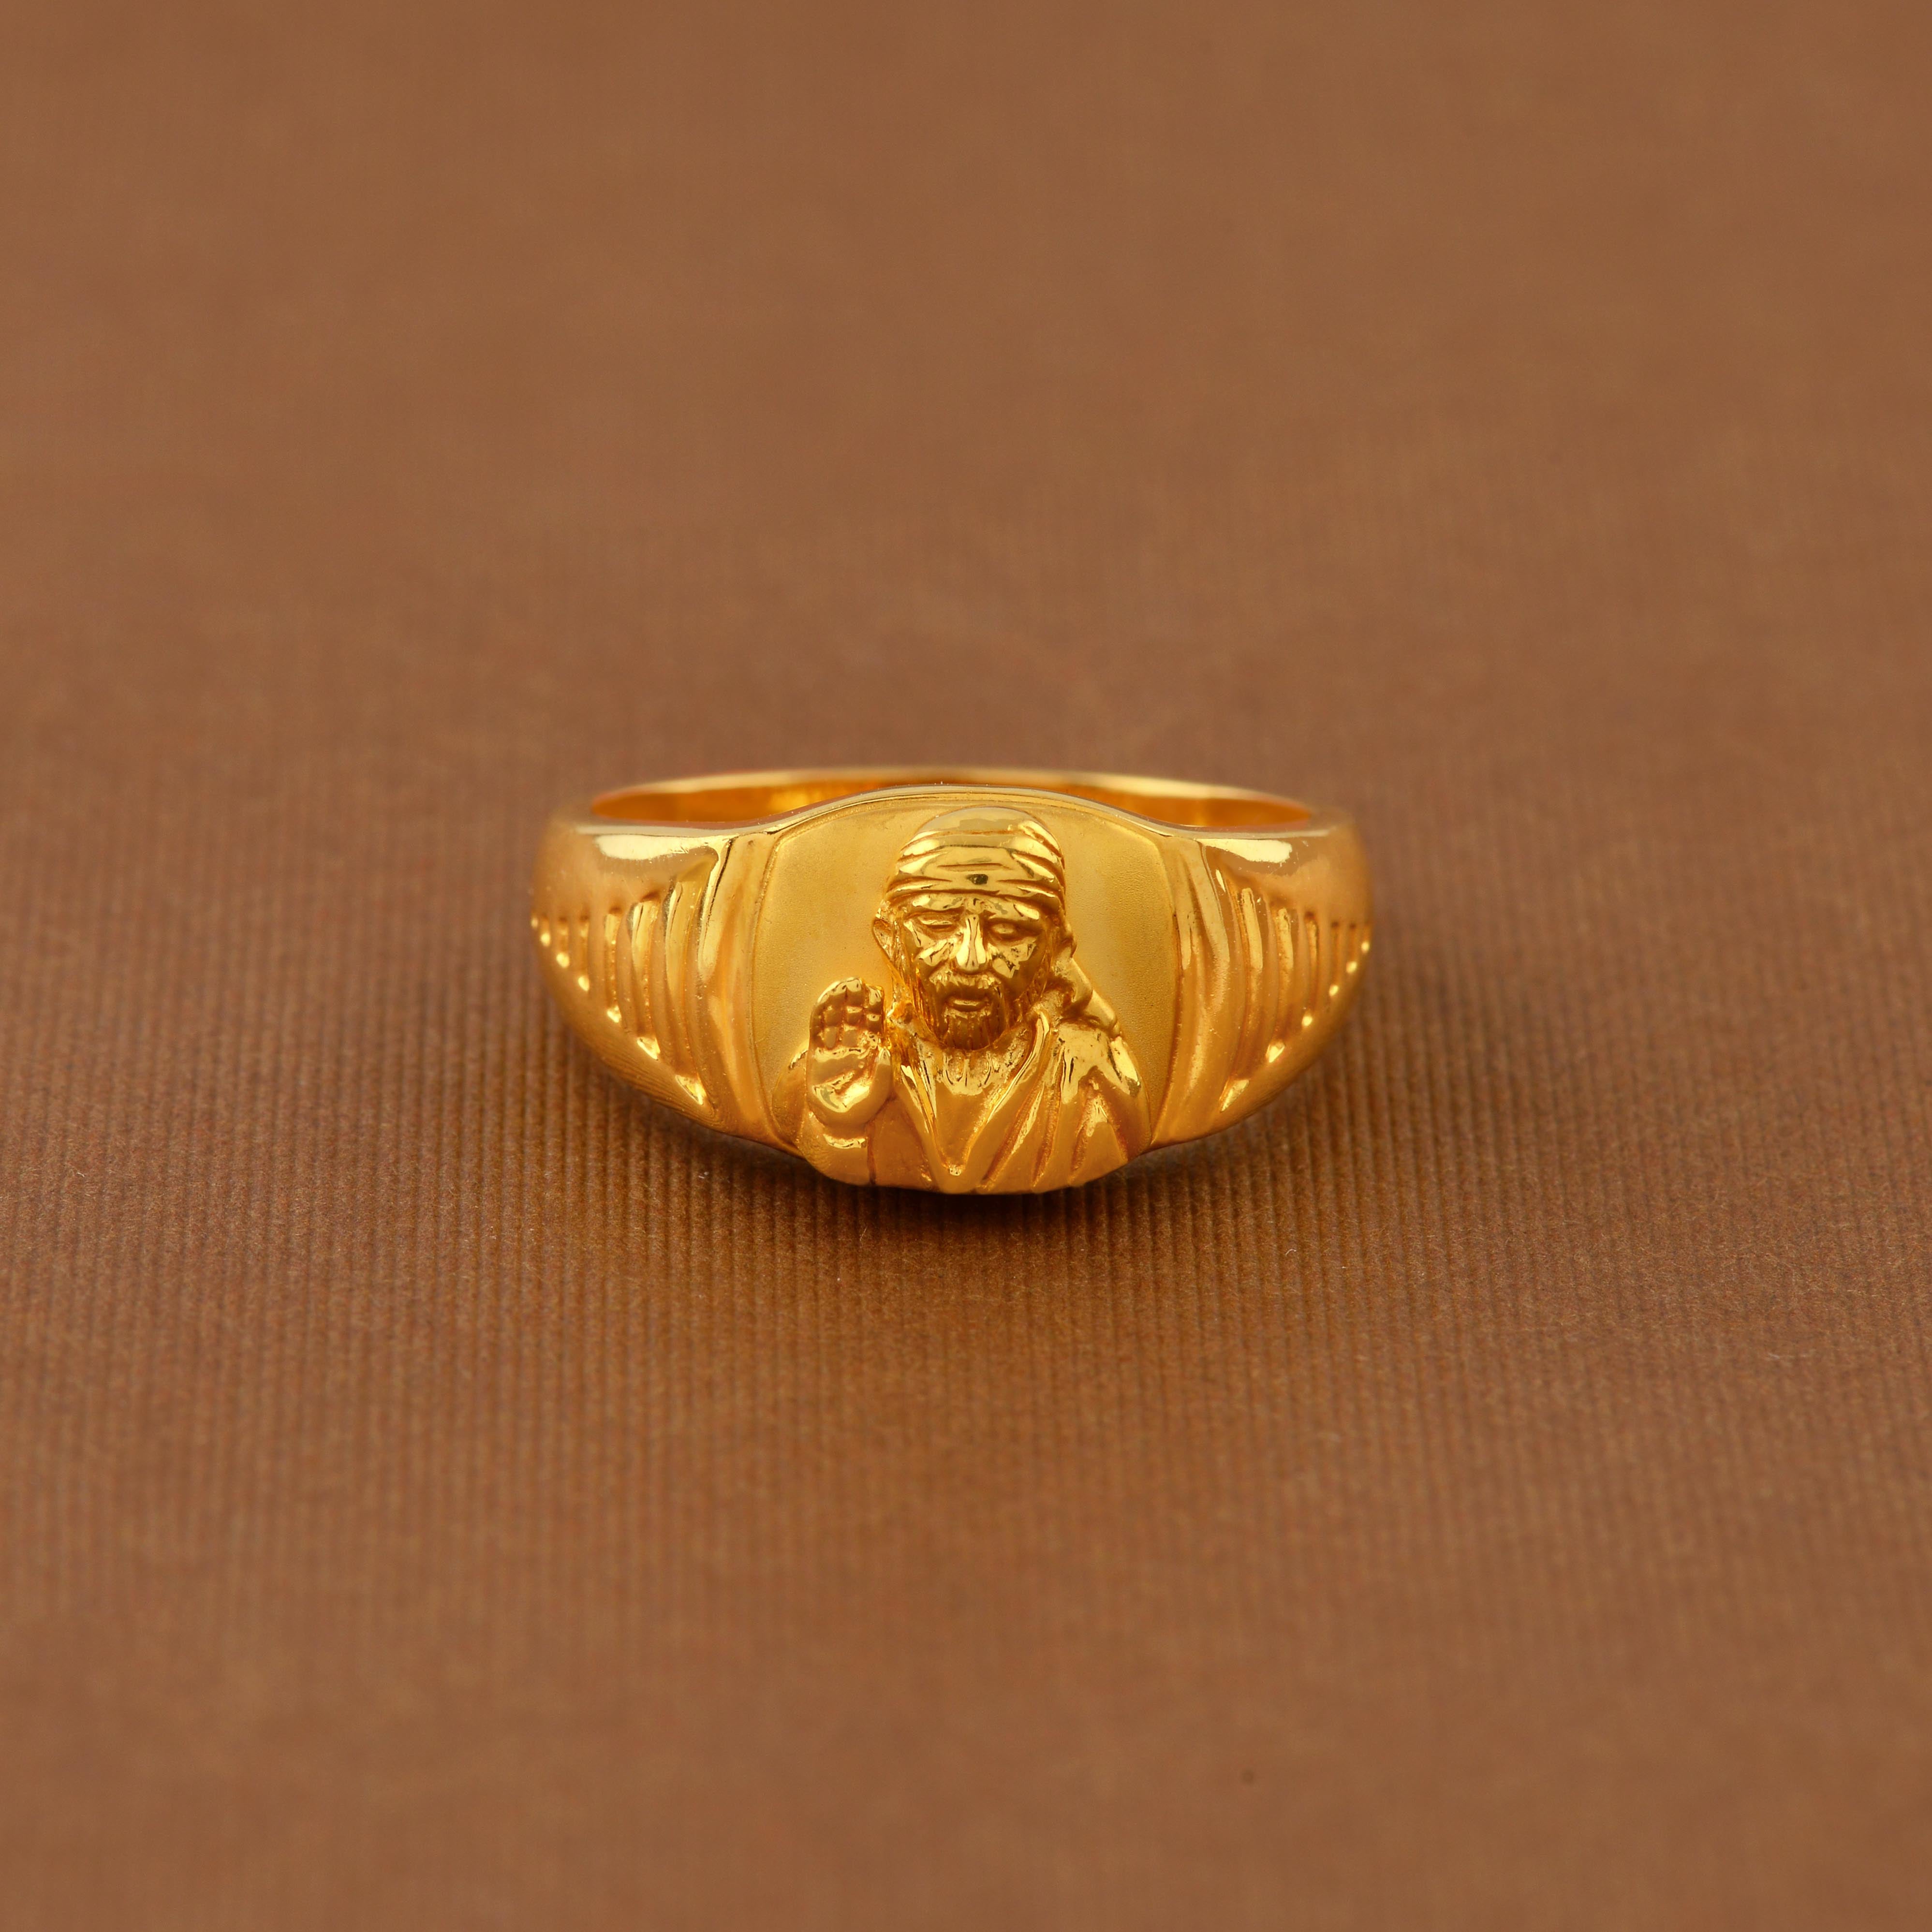 Buy 22K Gold Finger Ring in Saibaba Motif Online |  store.krishnajewellers.com